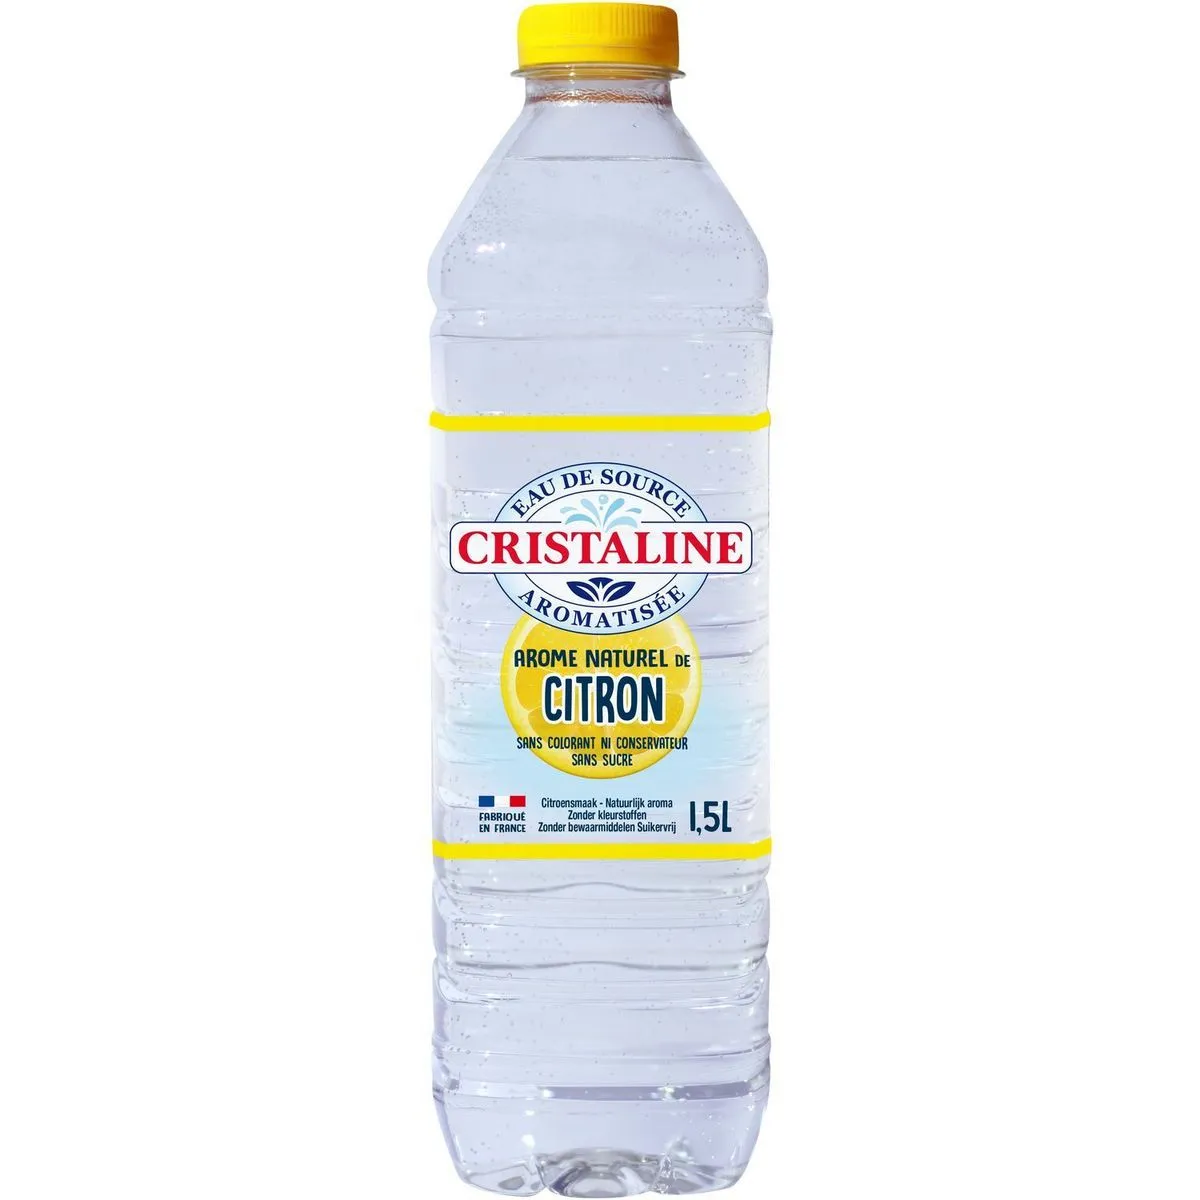  cristaline aromatisee citron